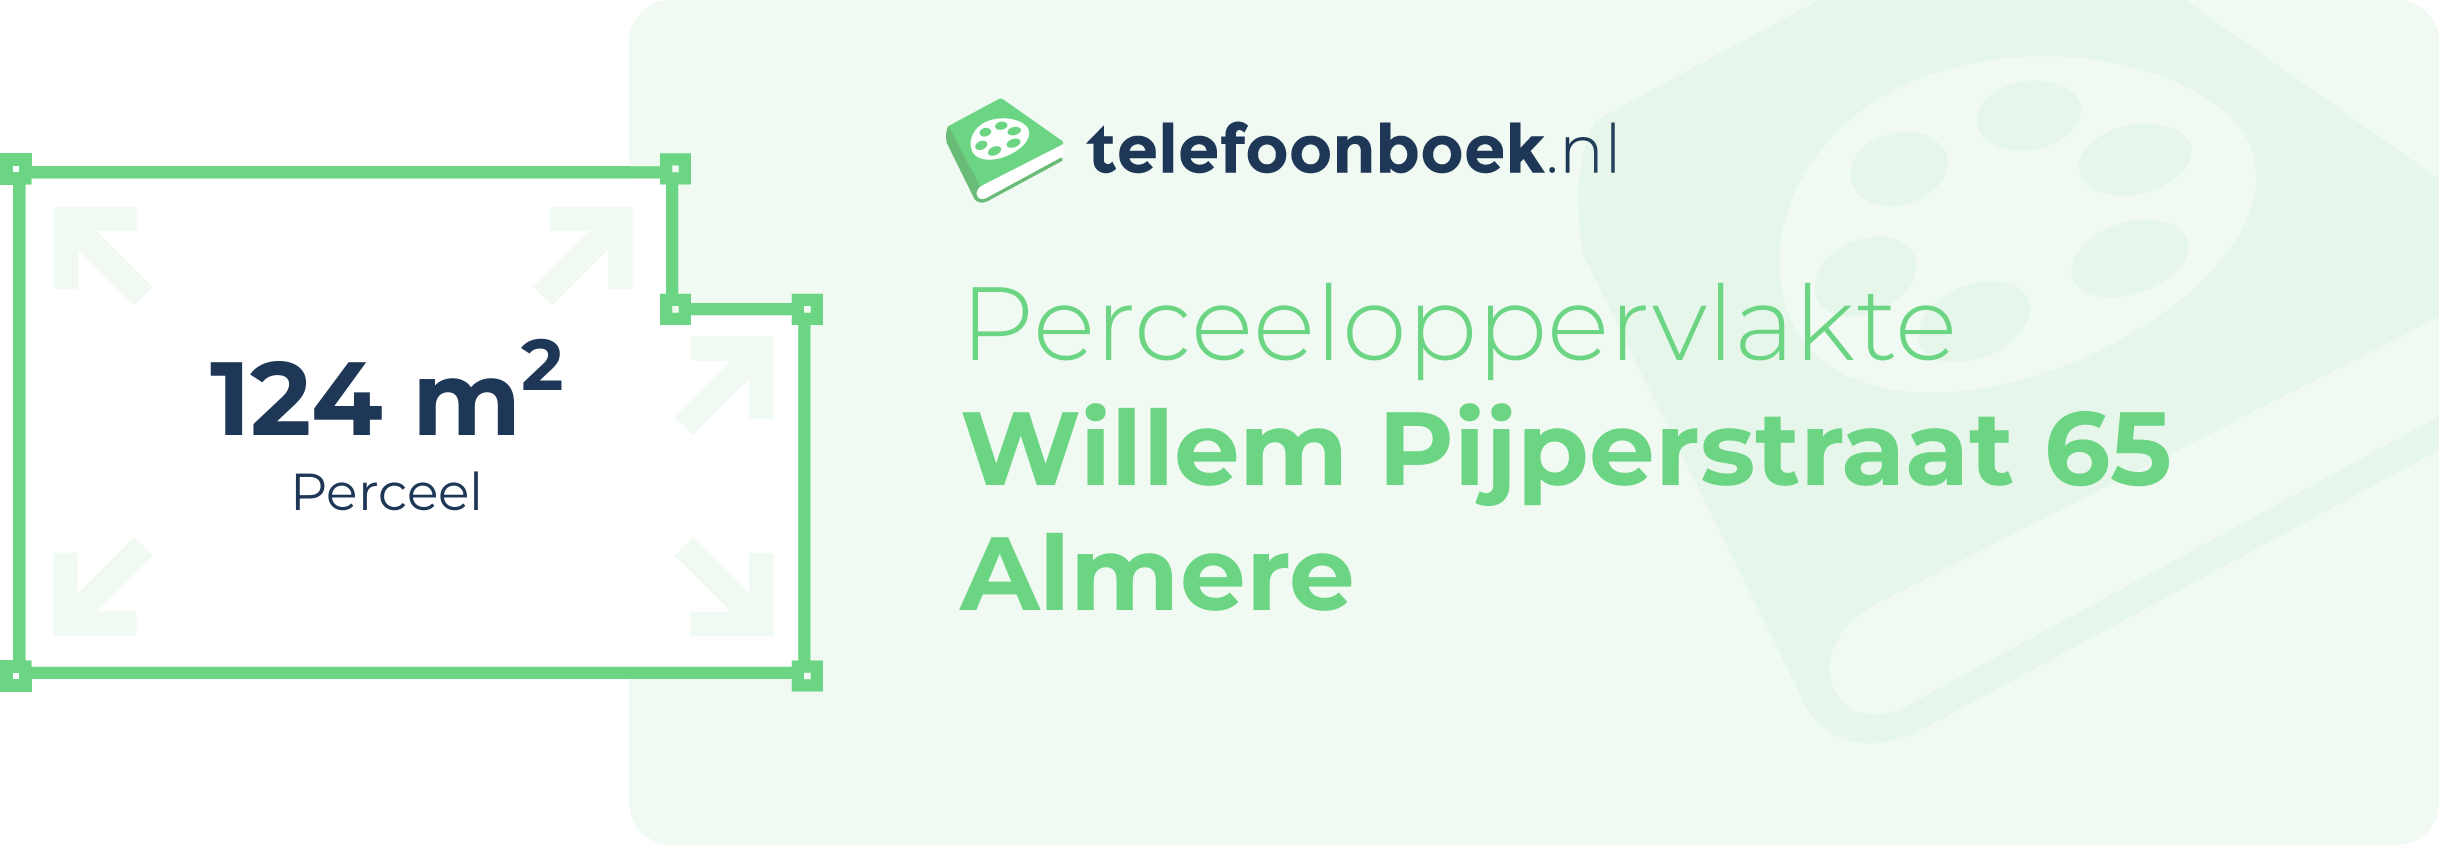 Perceeloppervlakte Willem Pijperstraat 65 Almere